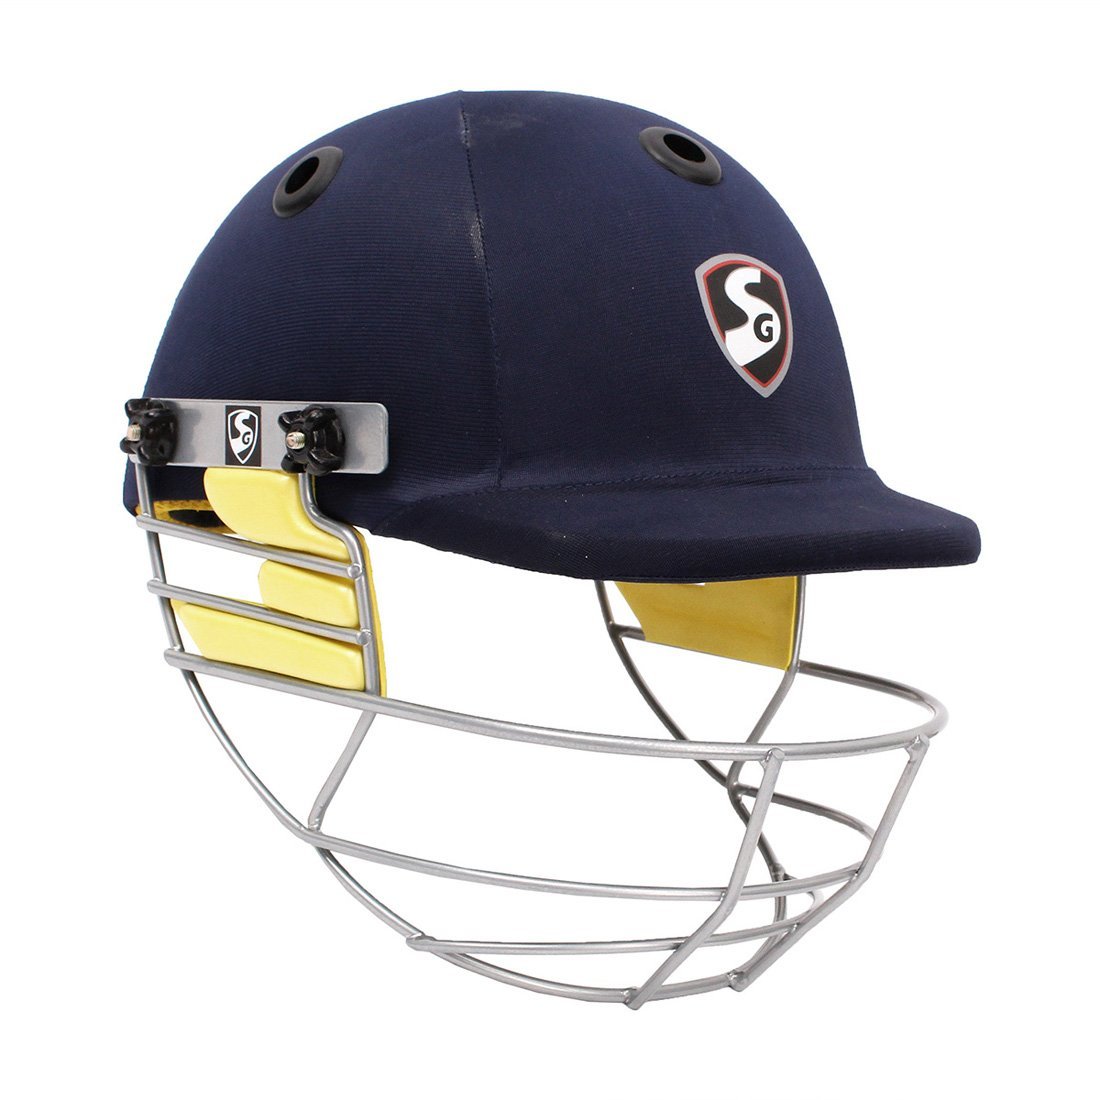 Cricket Helmet  SG BLAZETECH